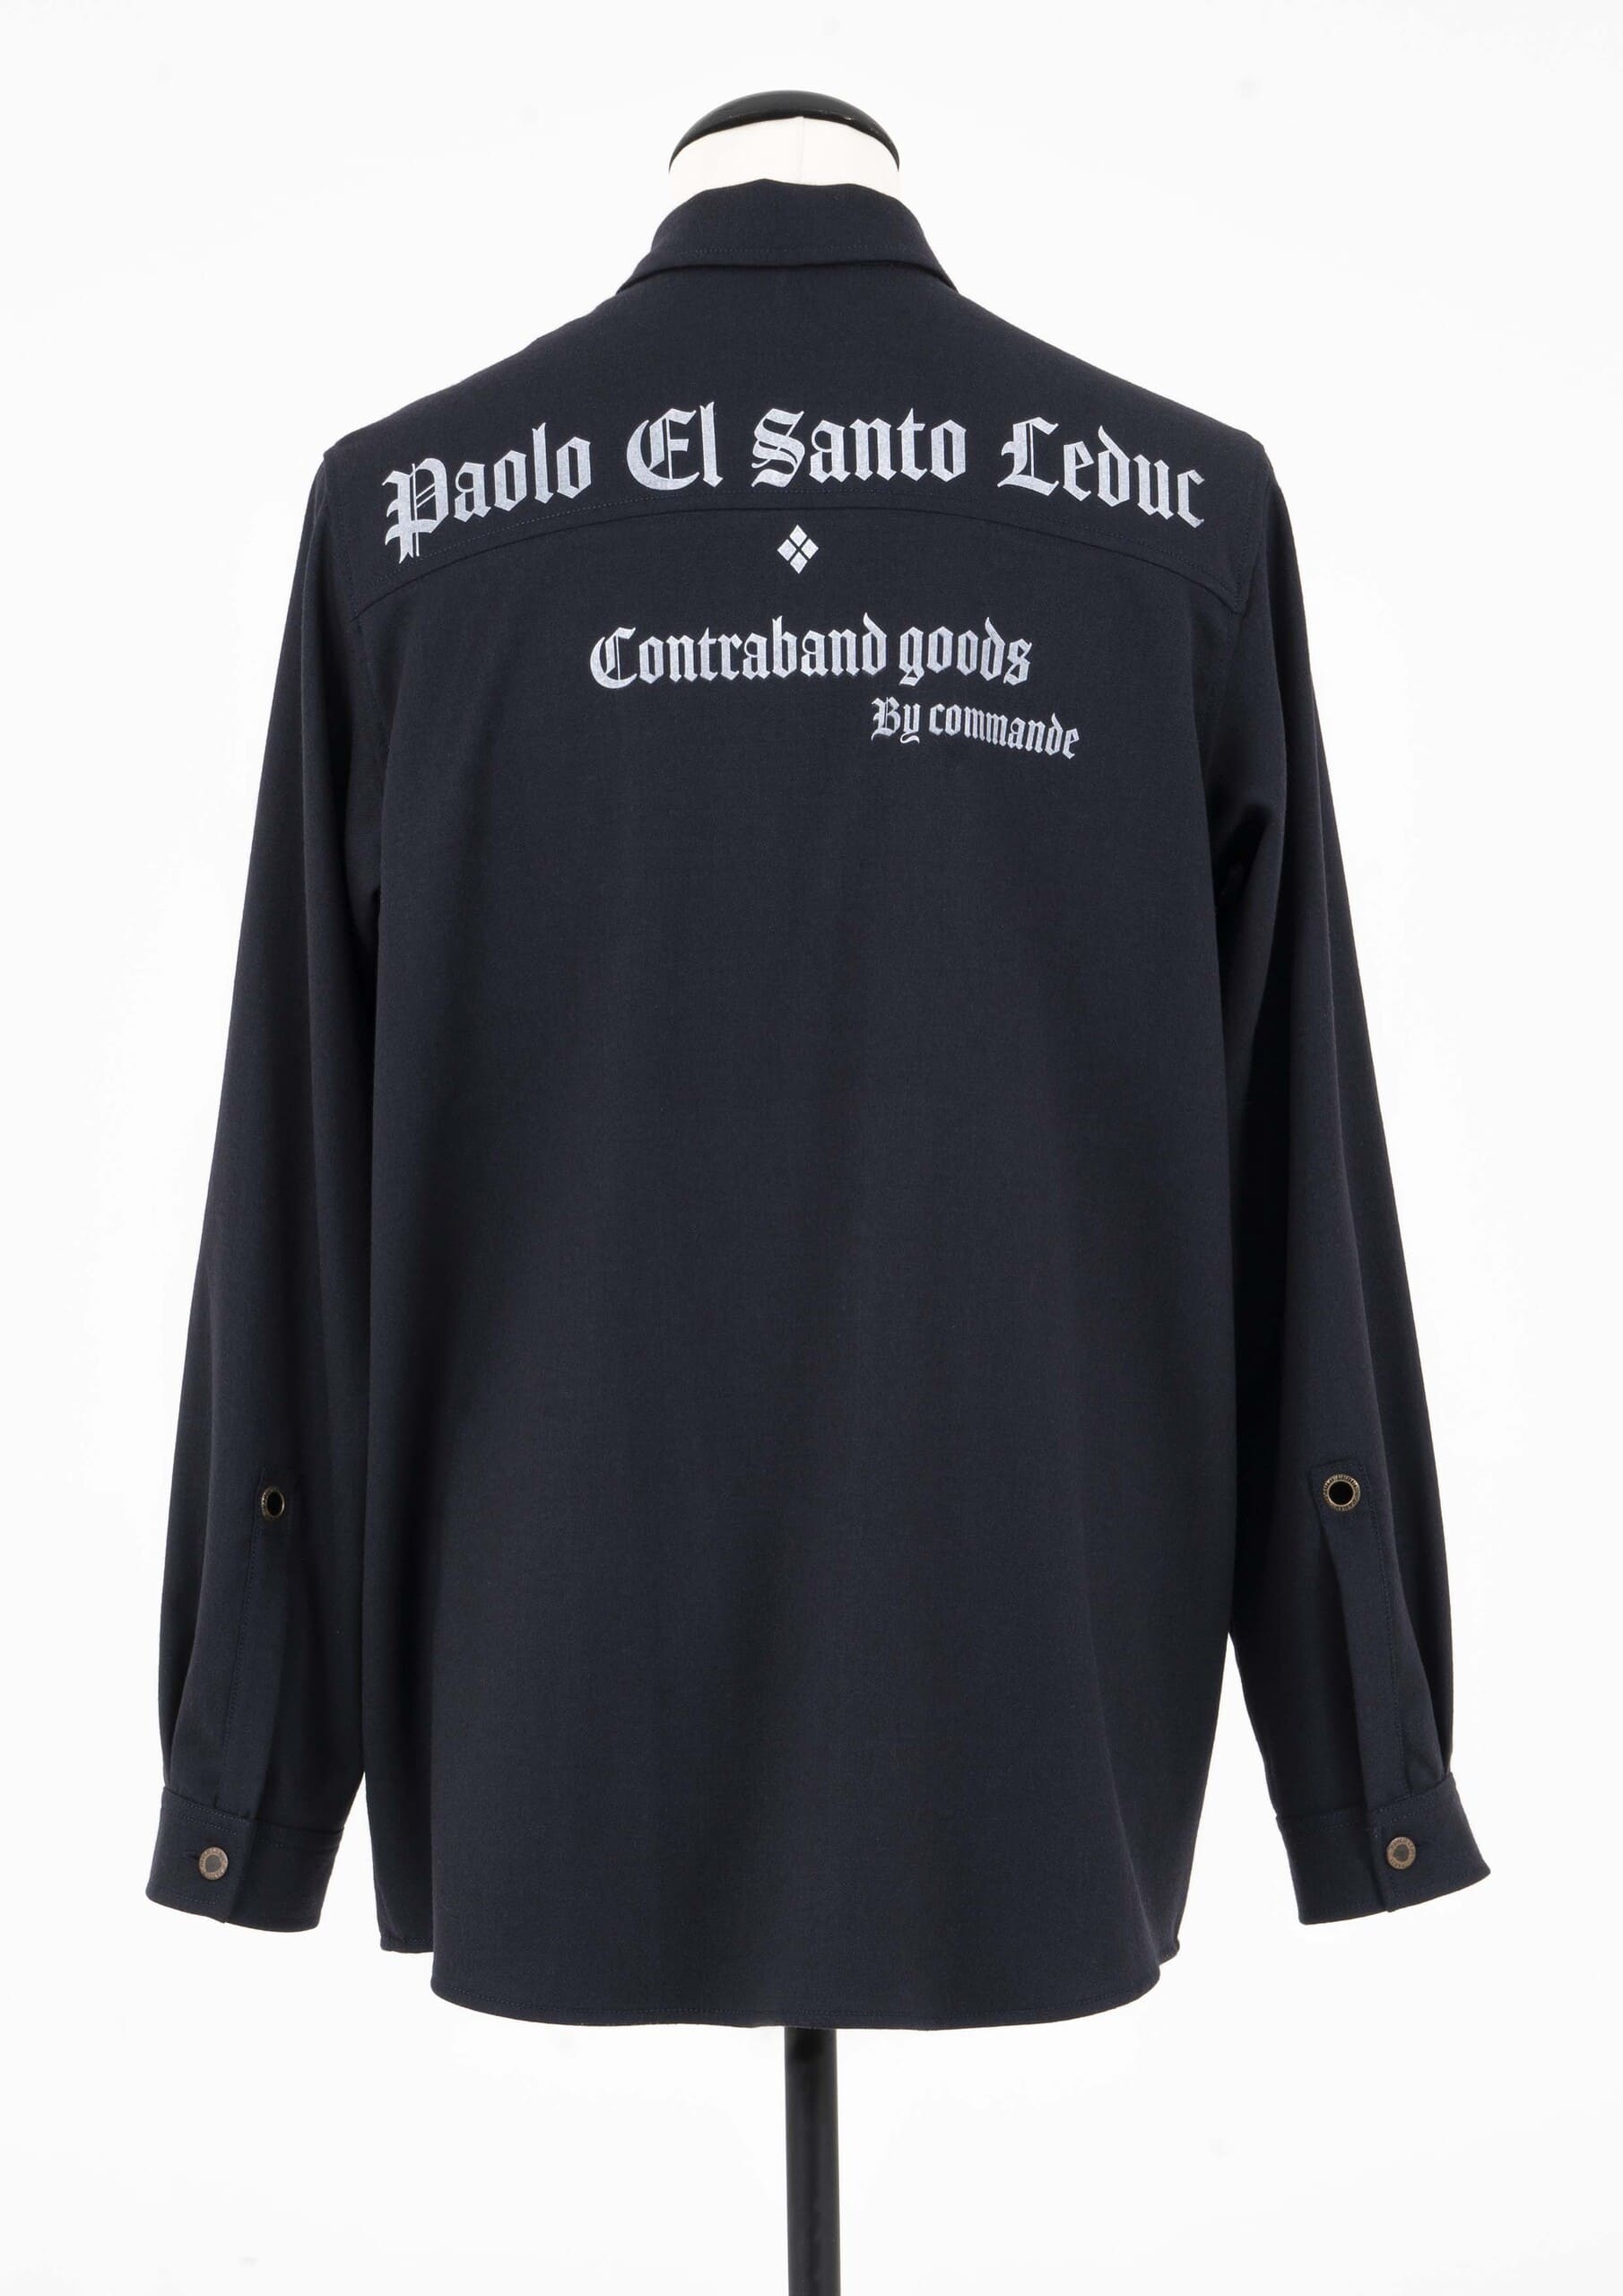 over-shirt-el-santo-leduc-2-back